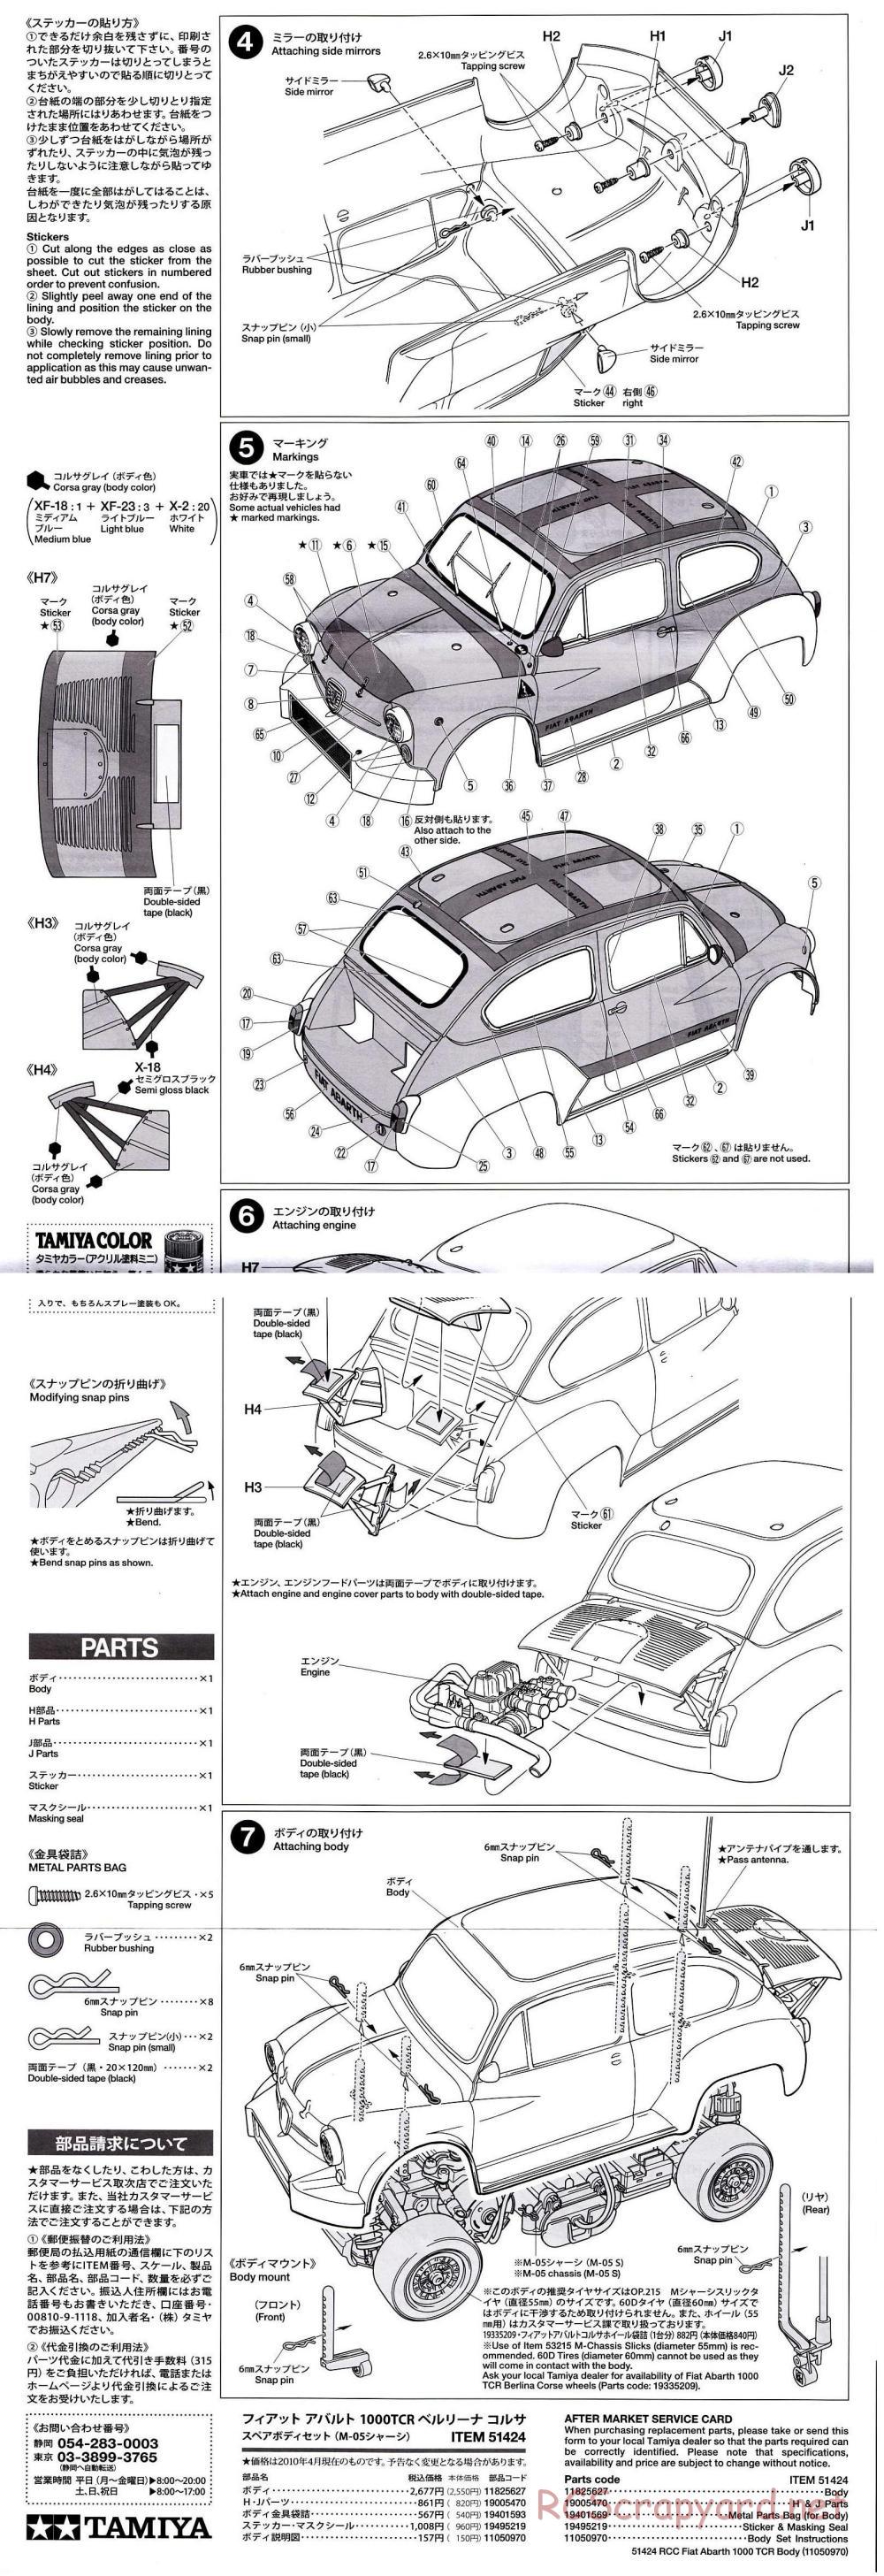 Tamiya - Fiat Abarth 1000 TCR Berlina Corse - M-05 Chassis - Body Manual - Page 2